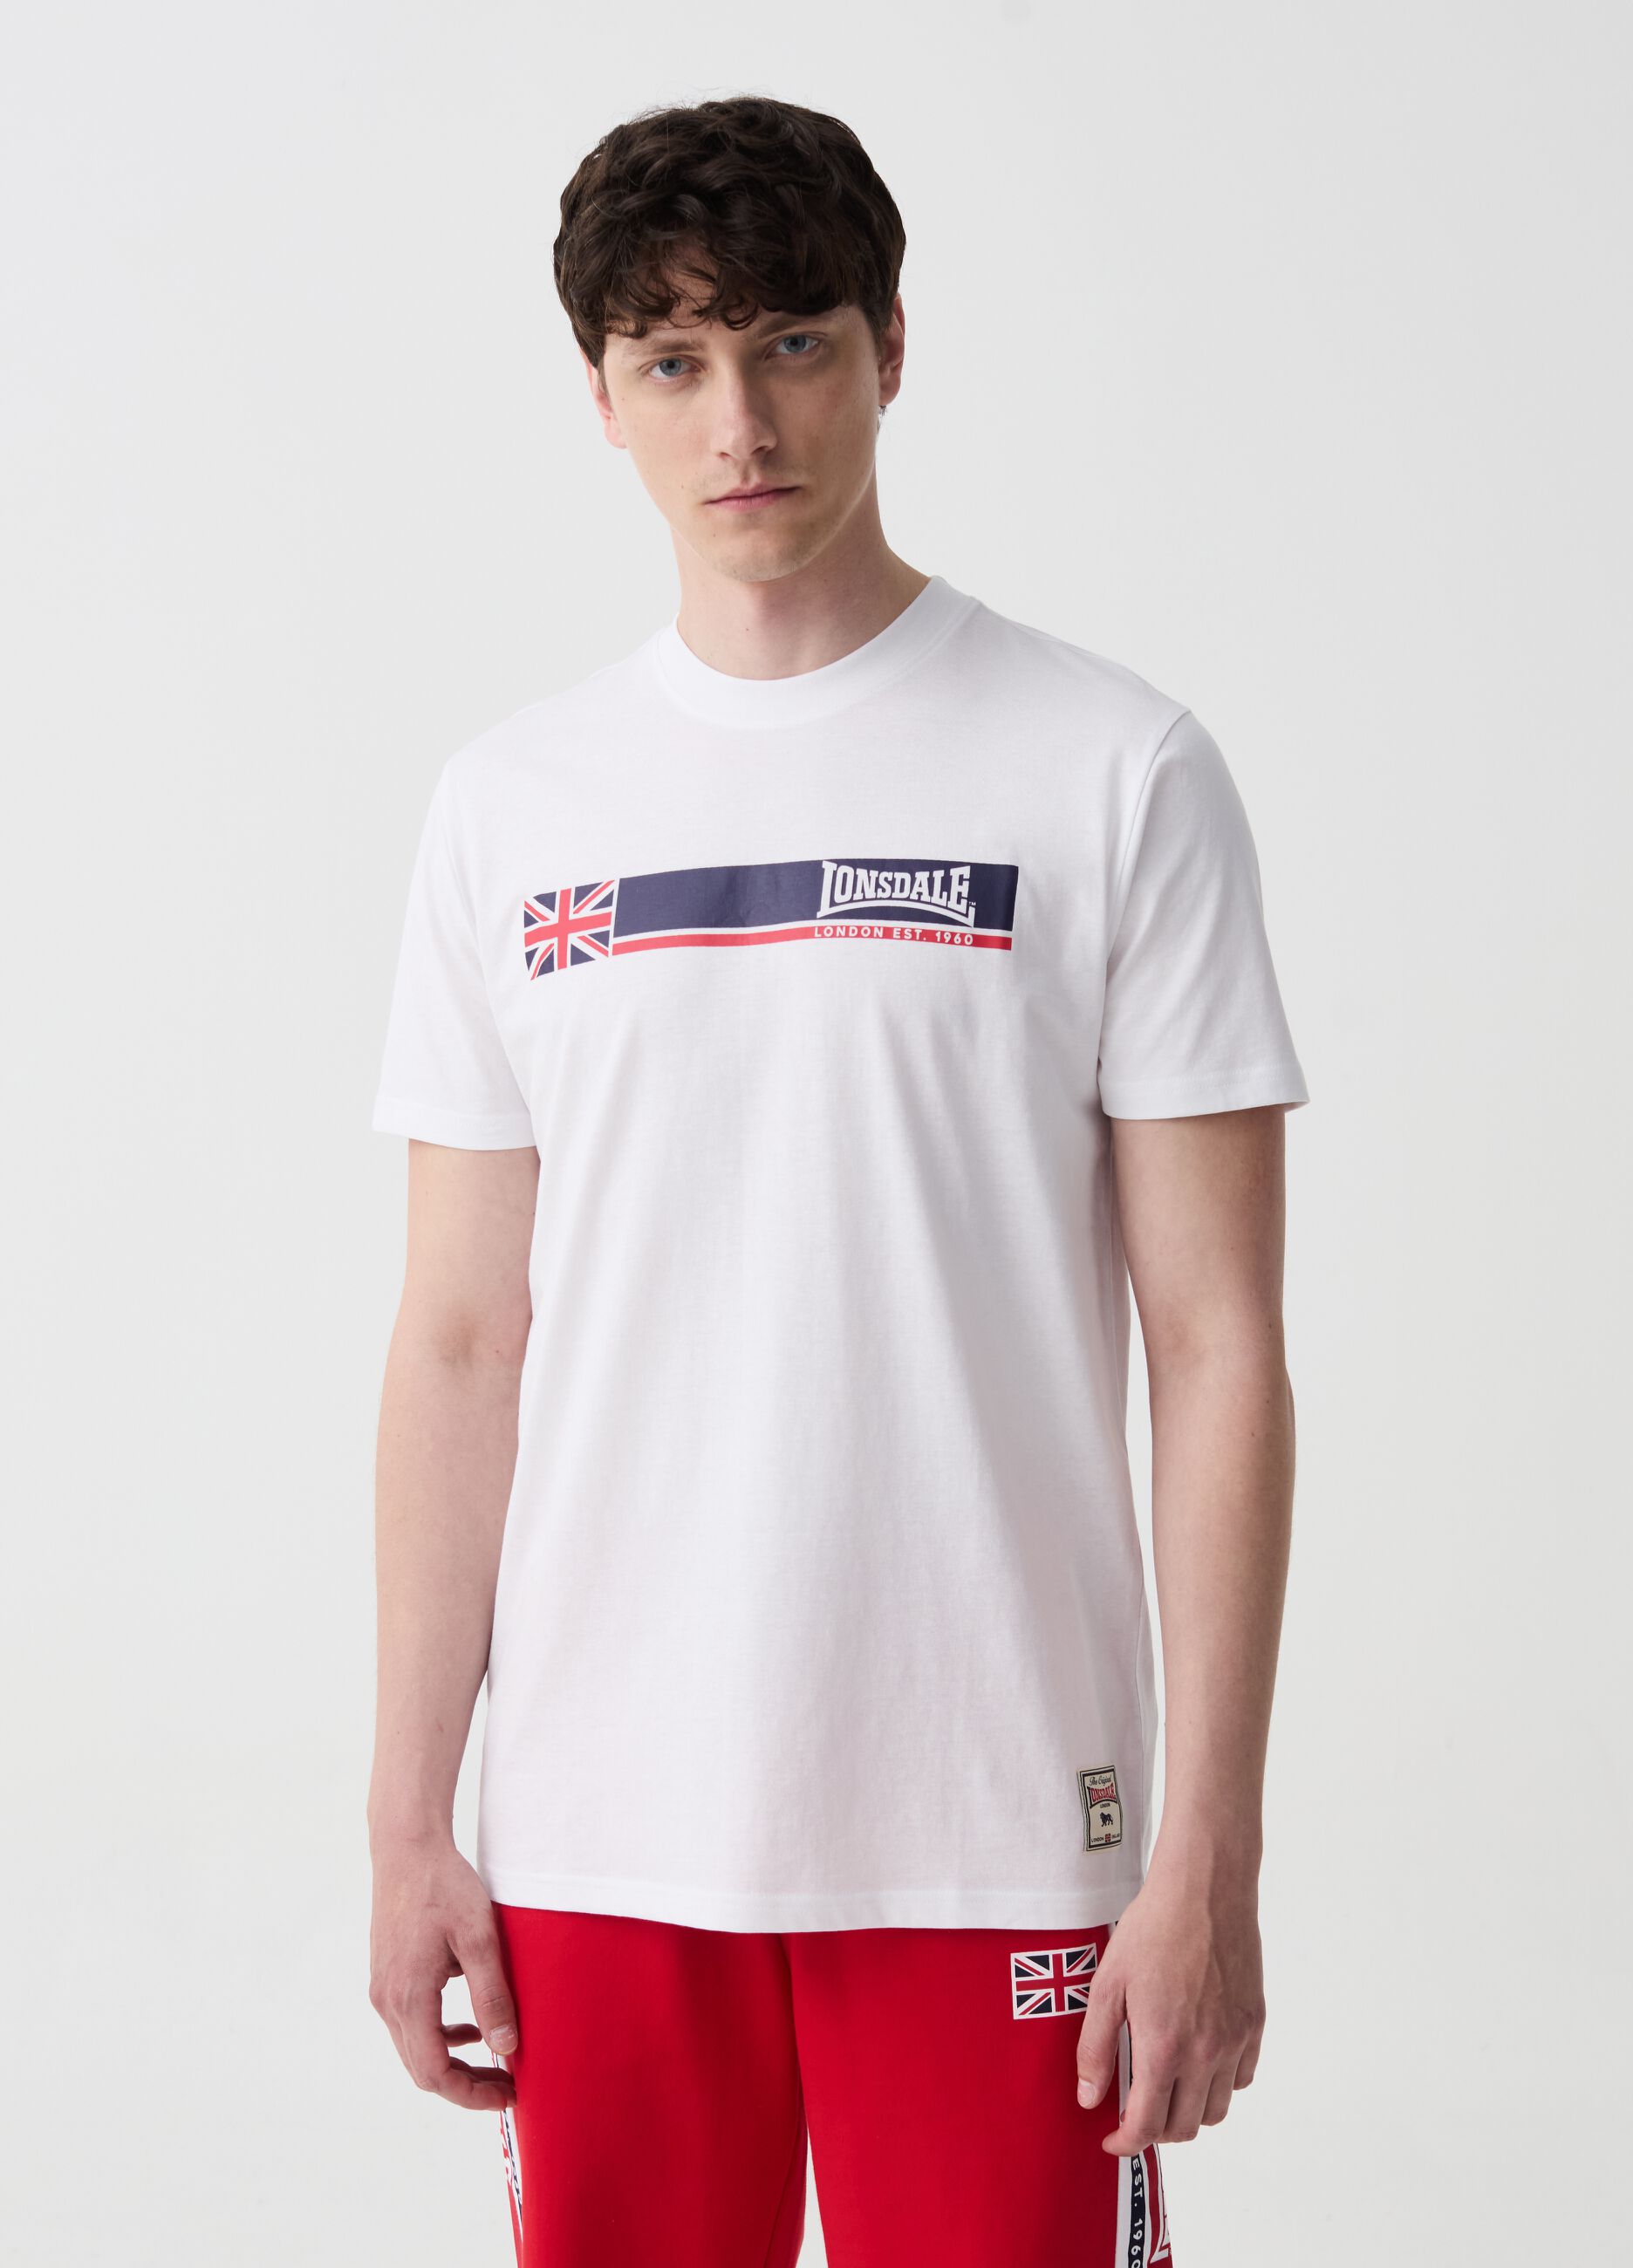 T-shirt con stampa logo e bandiera UK